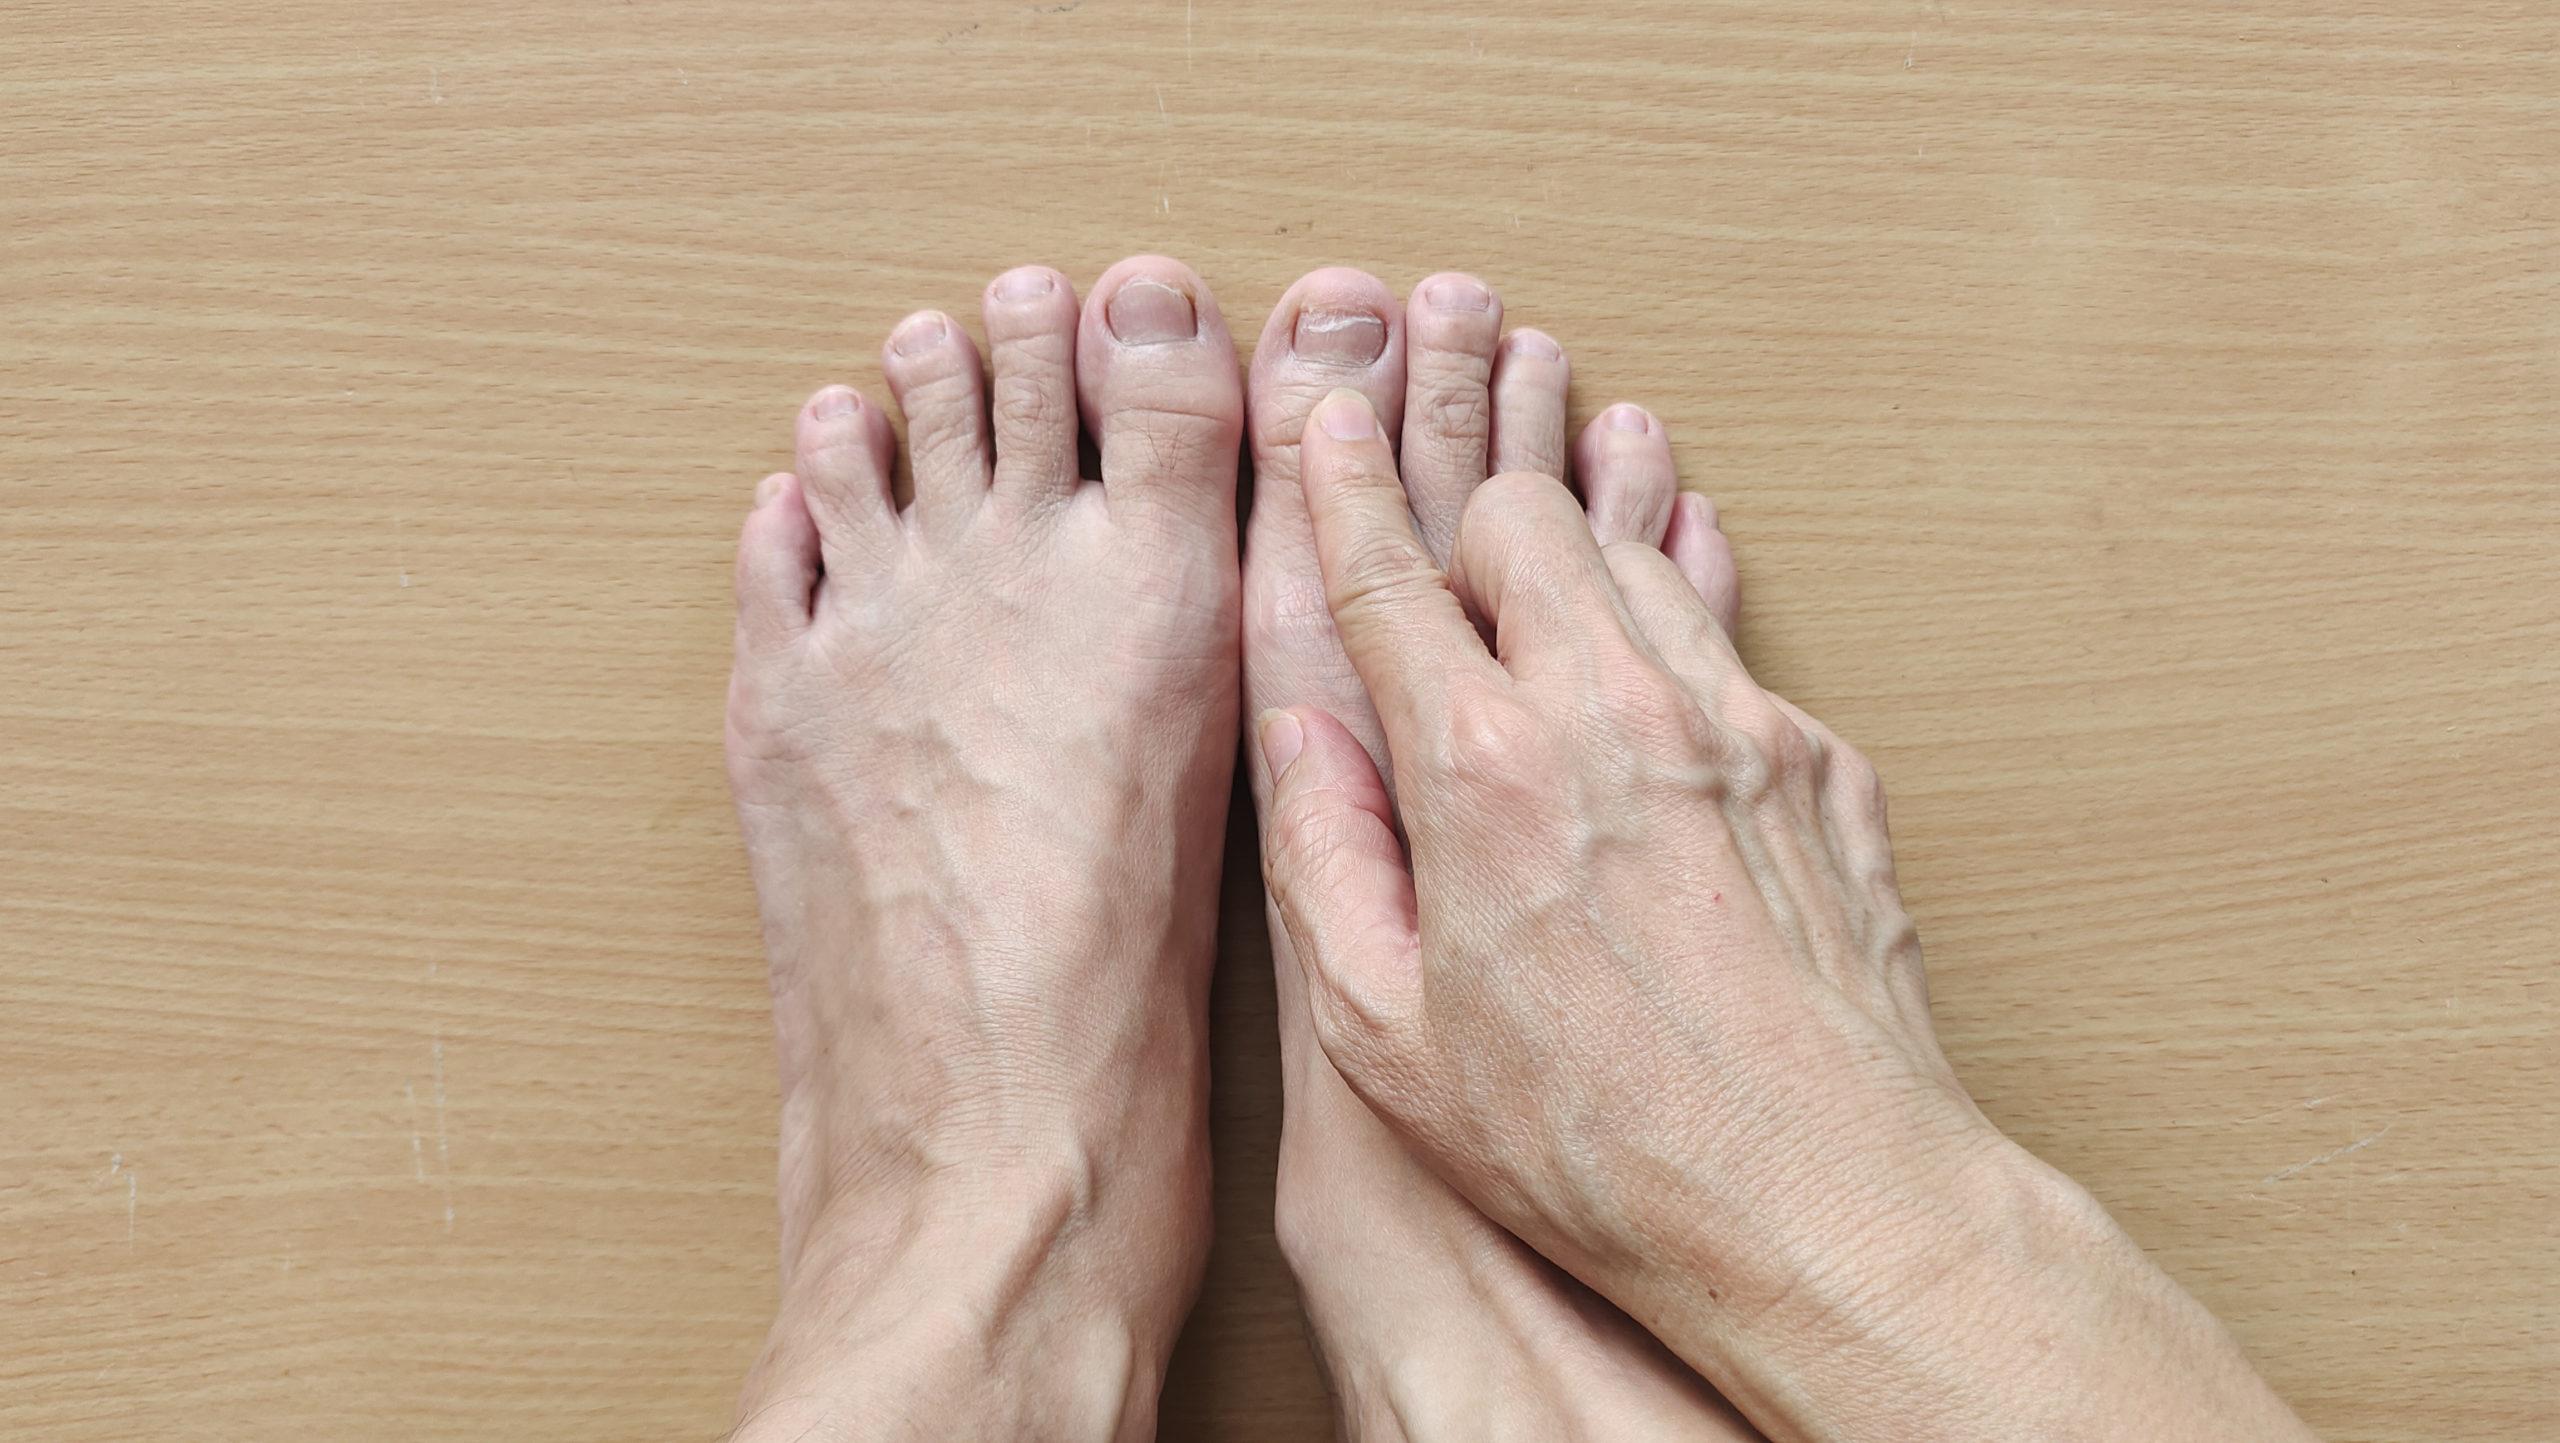 Arthritis: Types, Symptoms, and Treatment